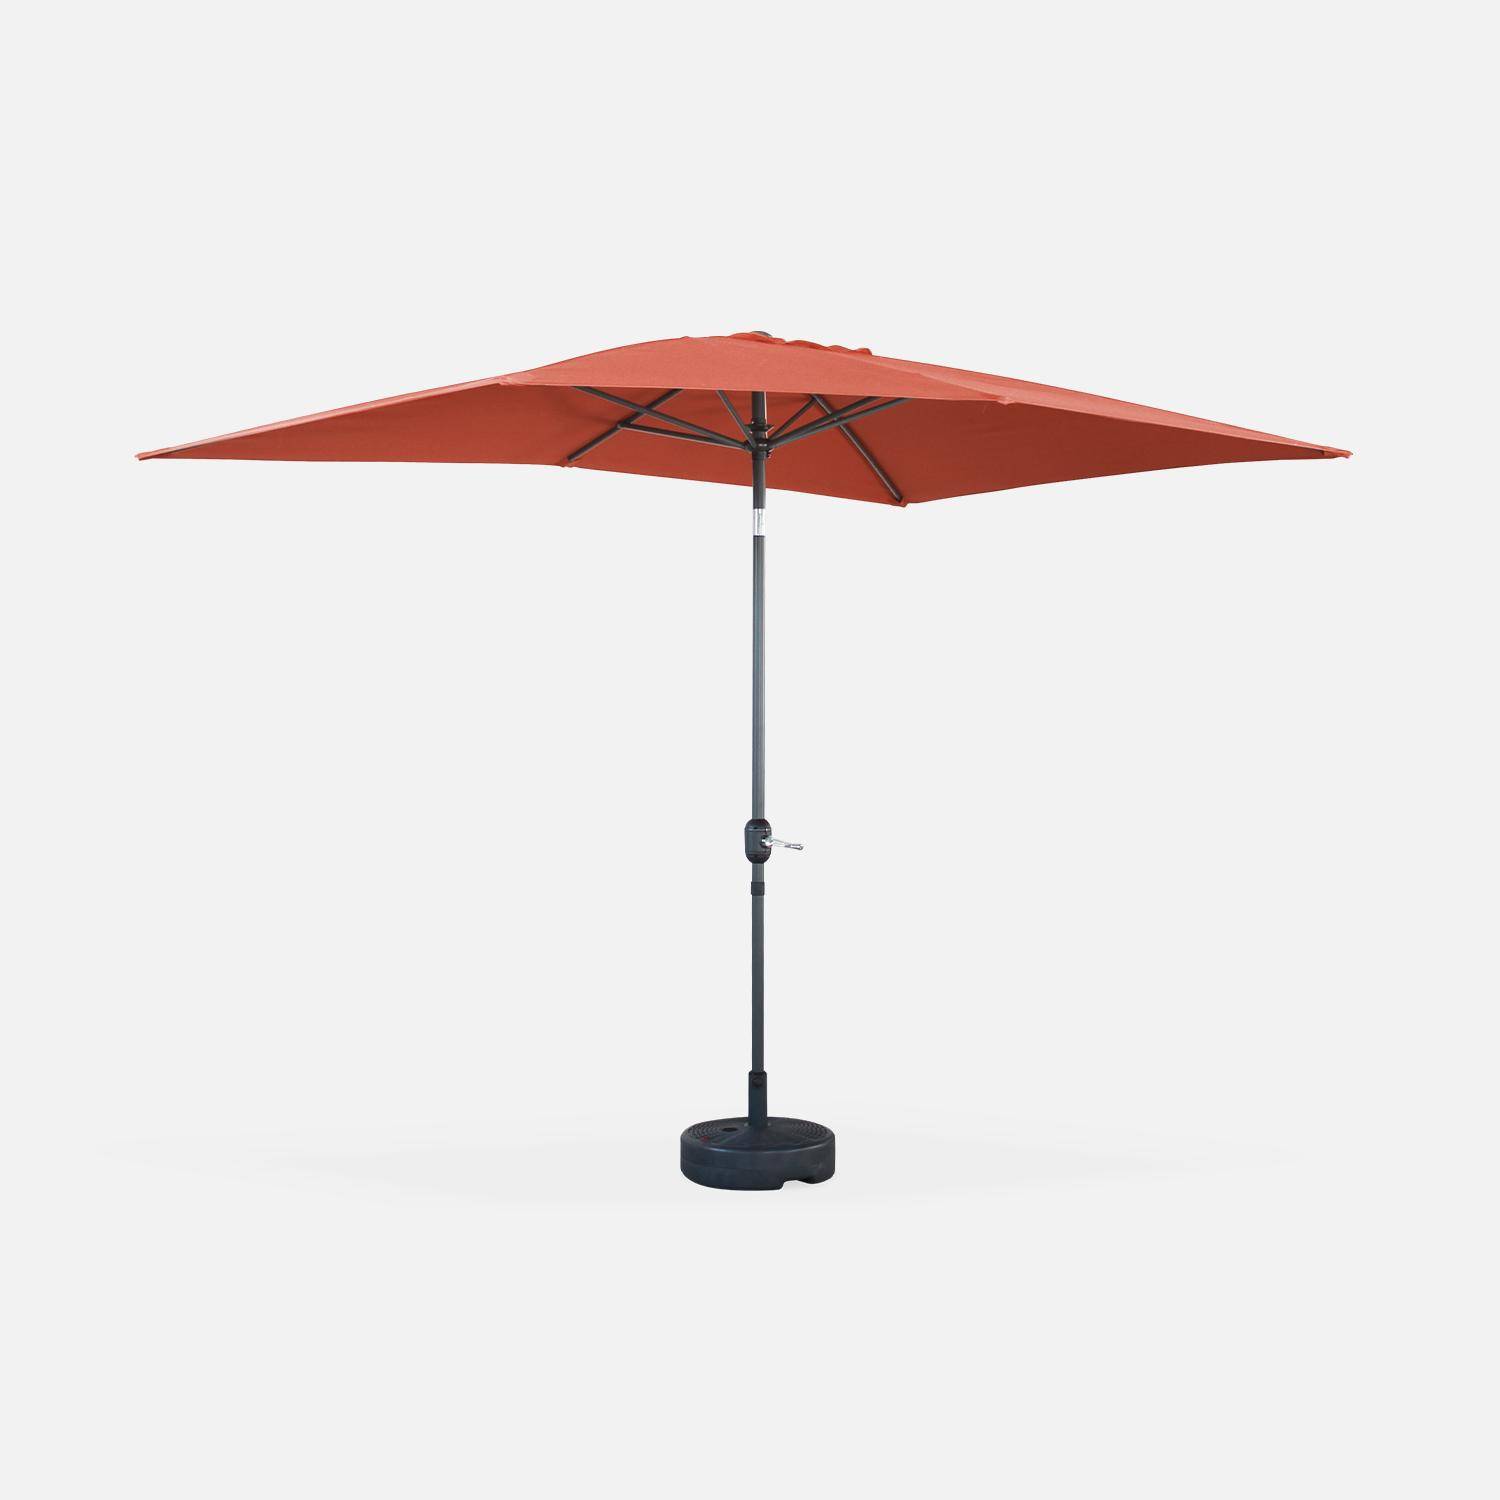 Sombrilla jardin, parasol rojo, mástil central, inclinable, rectangular, 2x3m, Touquet,sweeek,Photo2